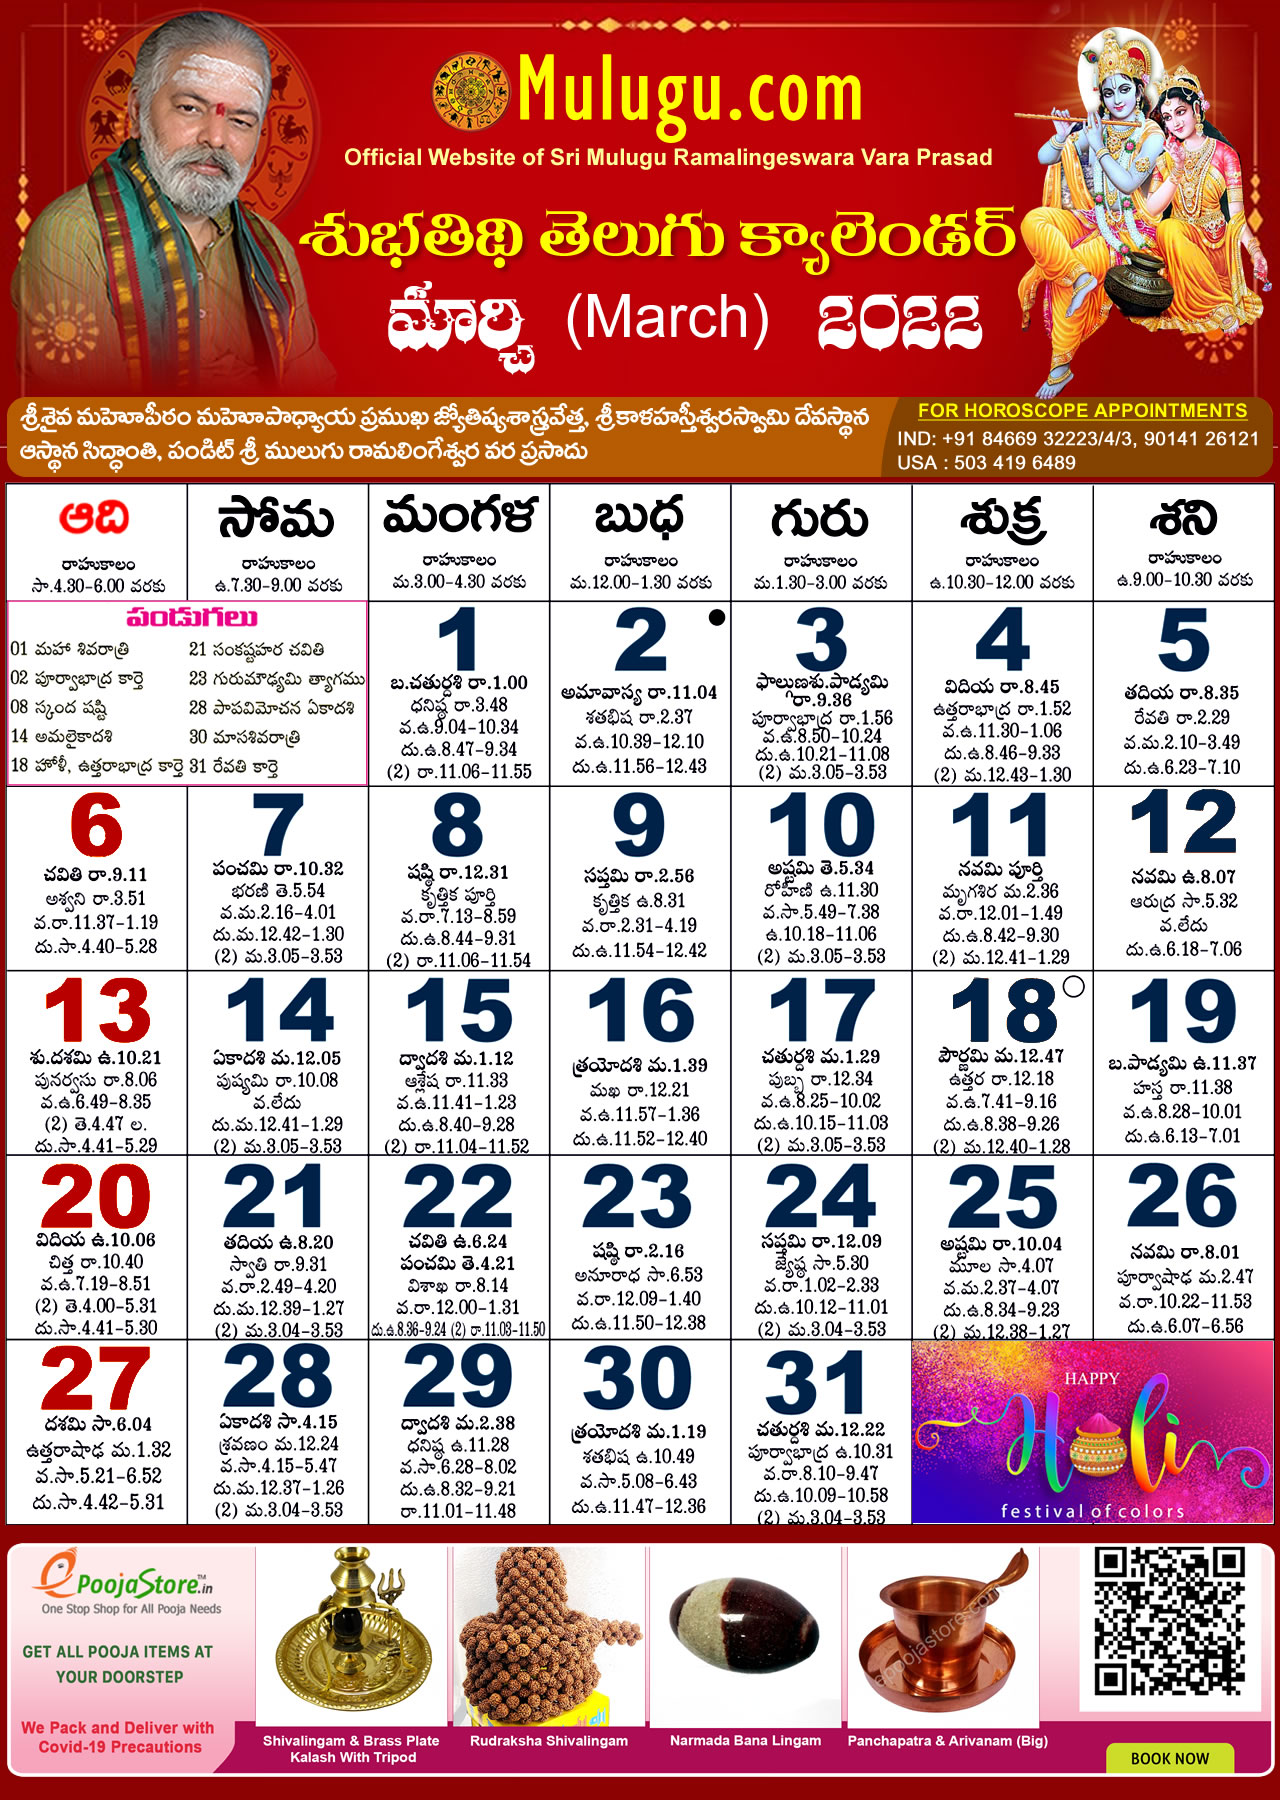 Eenadu Telugu Calendar 2022 Subhathidi March Telugu Calendar 2022 | Telugu Calendar 2022 - 2023 | Telugu  Subhathidi Calendar 2022 | Calendar 2022 | Telugu Calendar 2022 |  Subhathidi Calendar 2022 | Chicago Calendar 2022 |